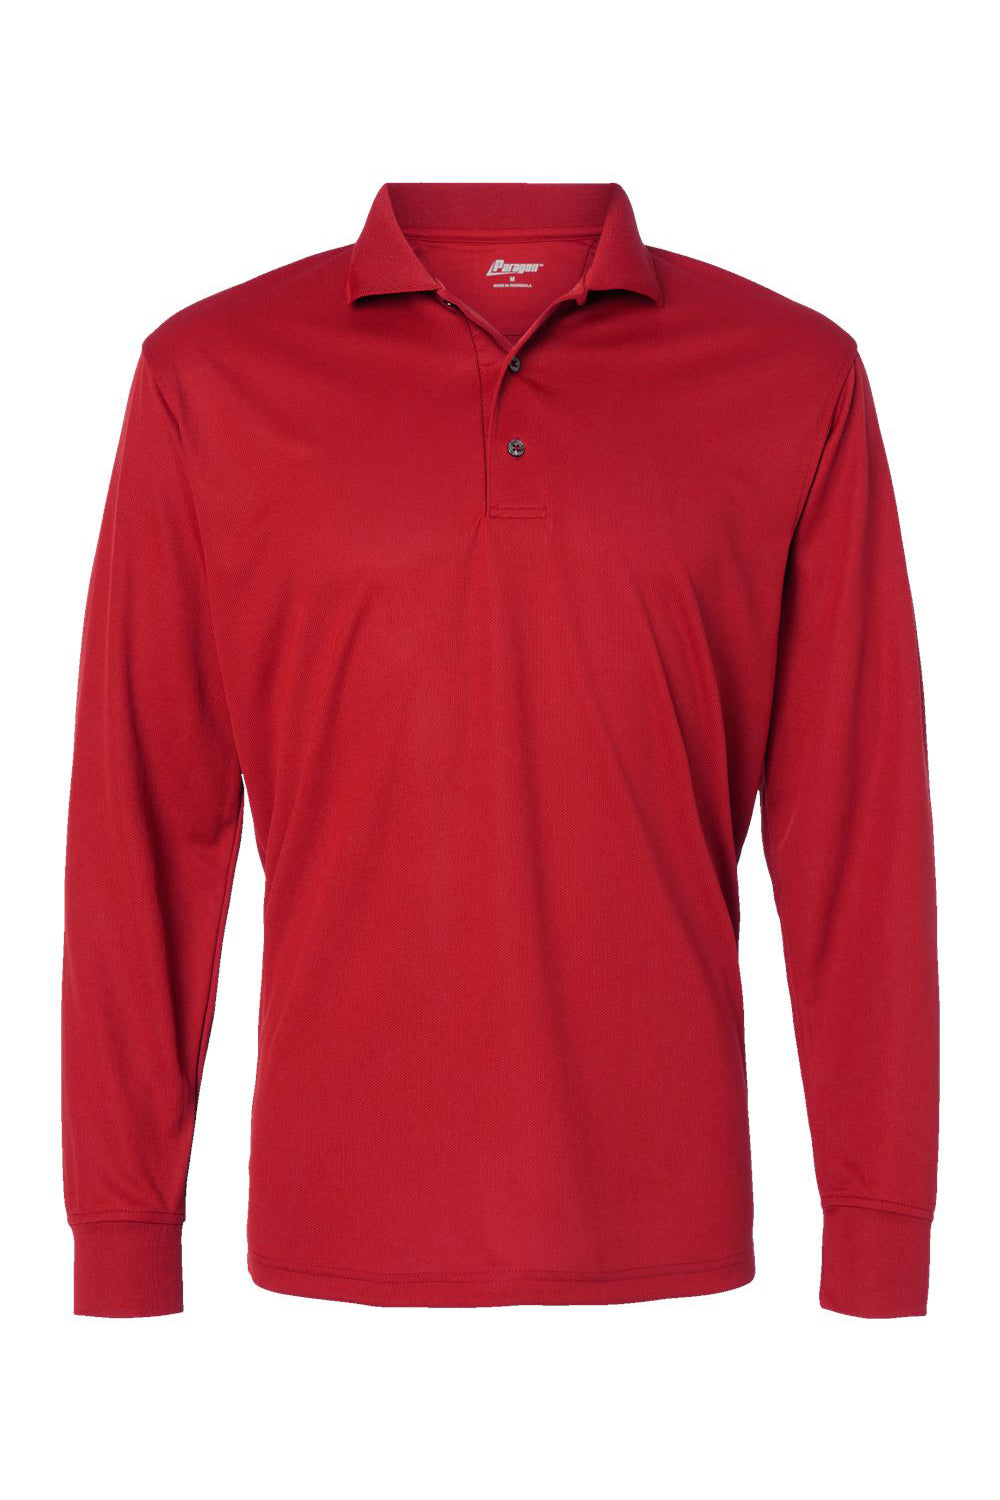 Paragon 110 Mens Prescott Long Sleeve Polo Shirt Red Flat Front